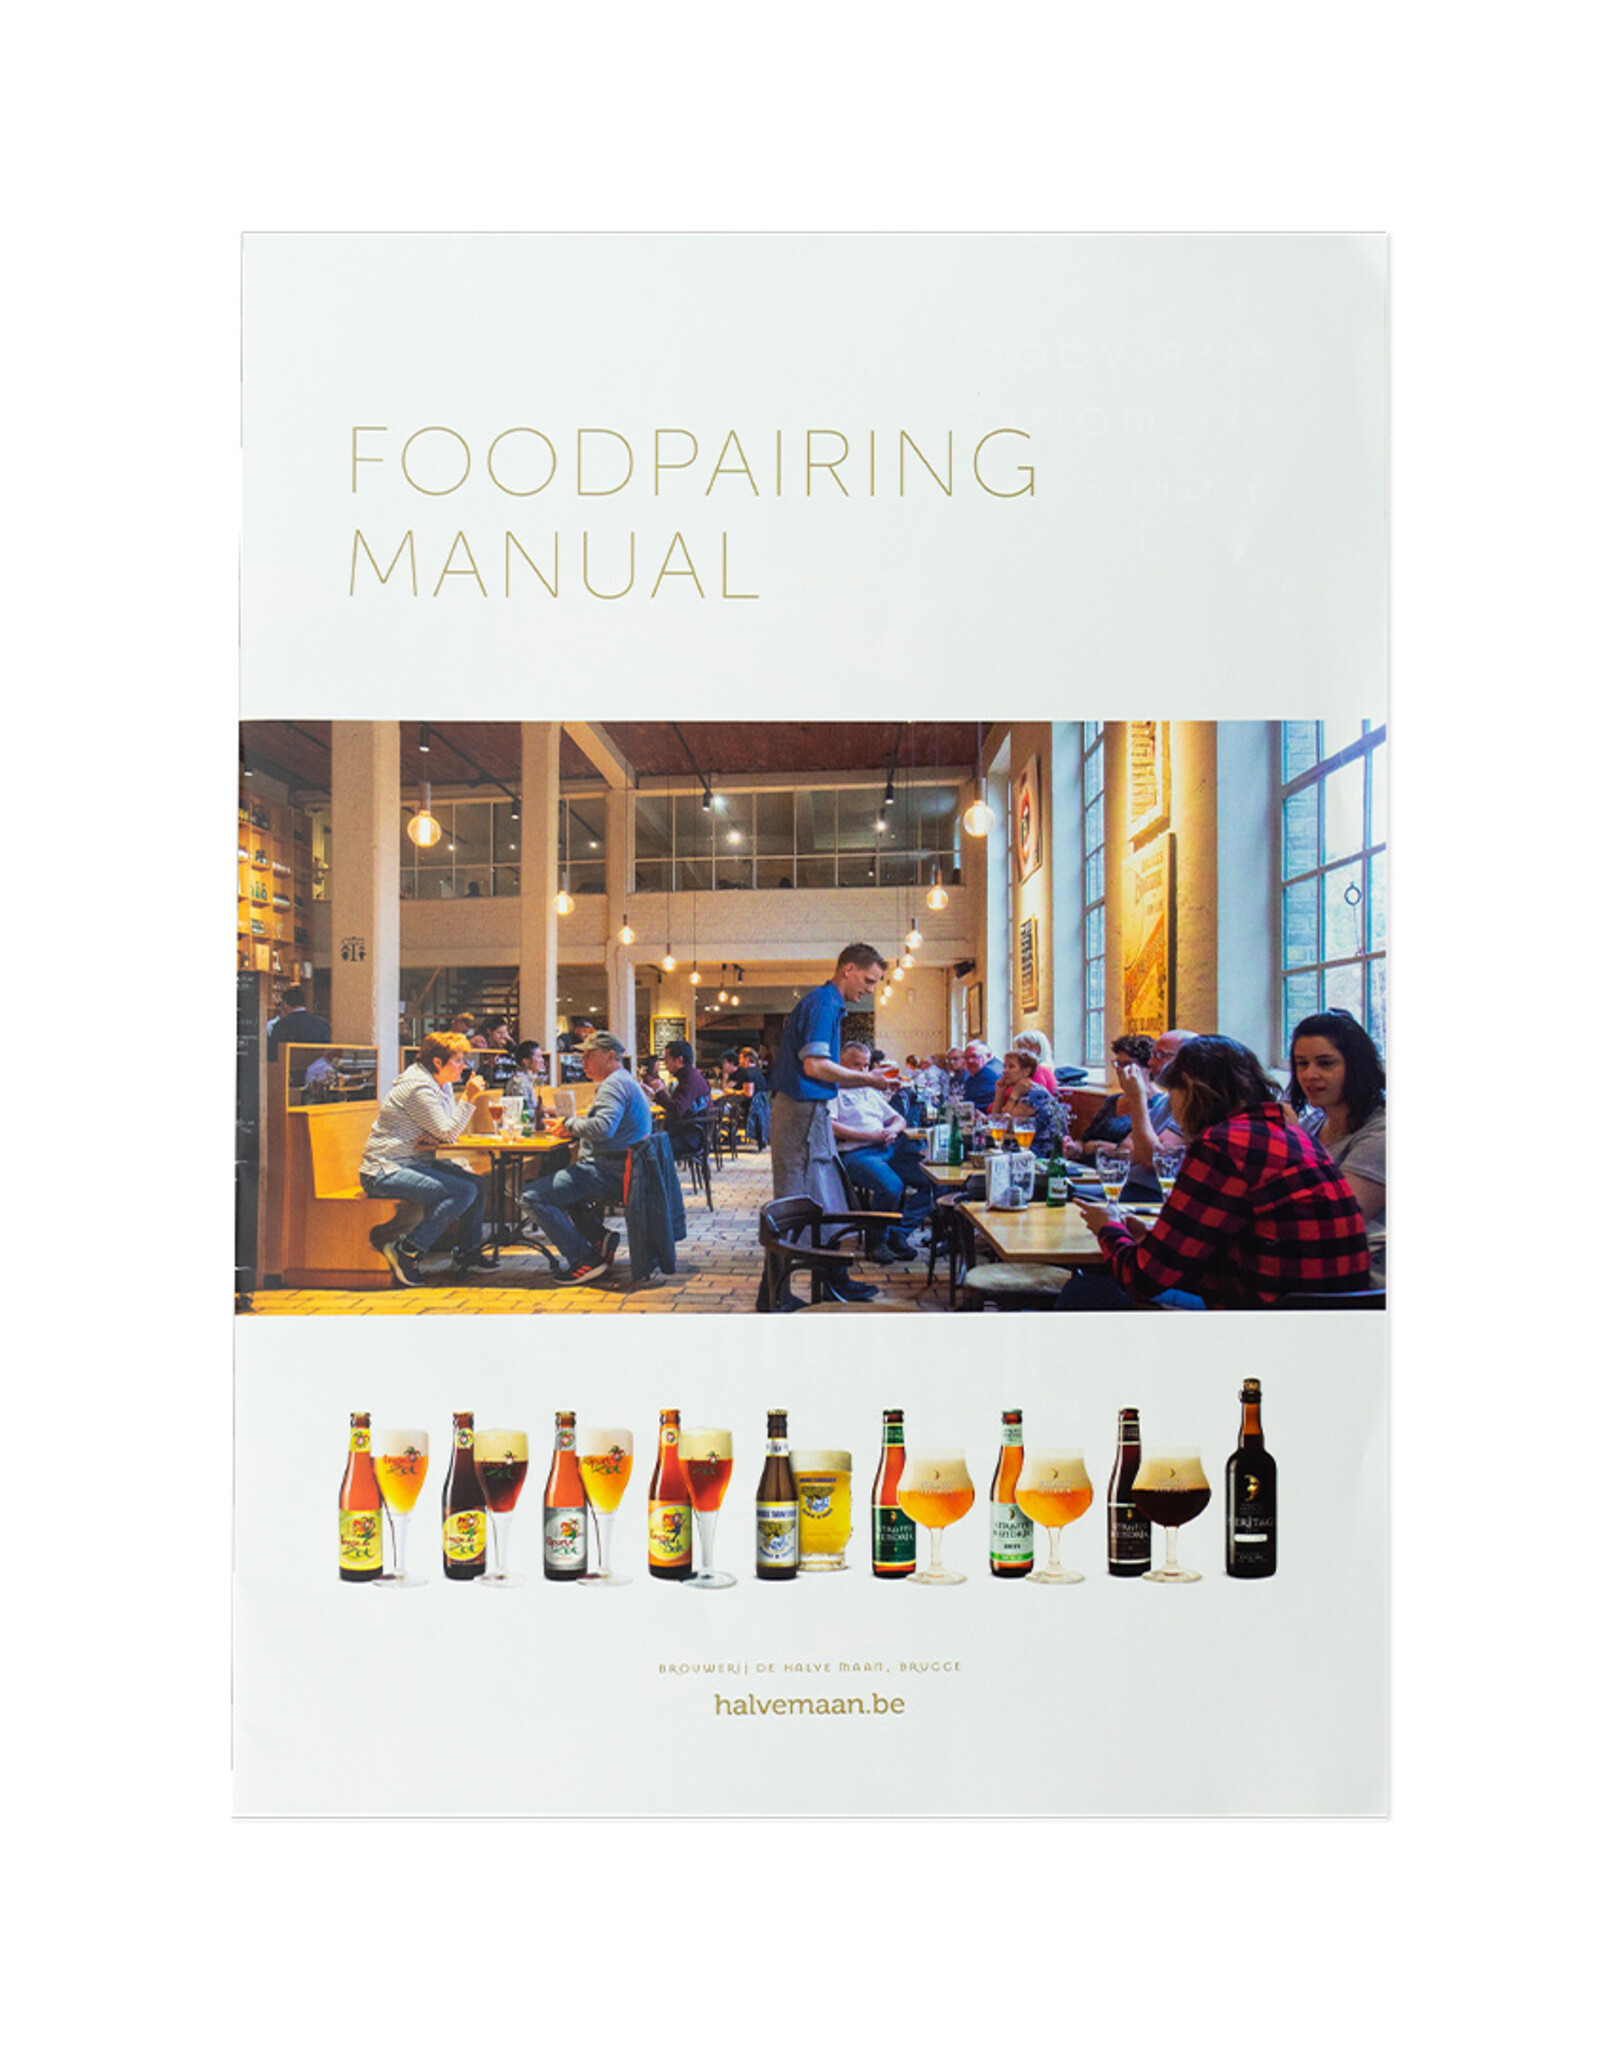 Foodpairing manual